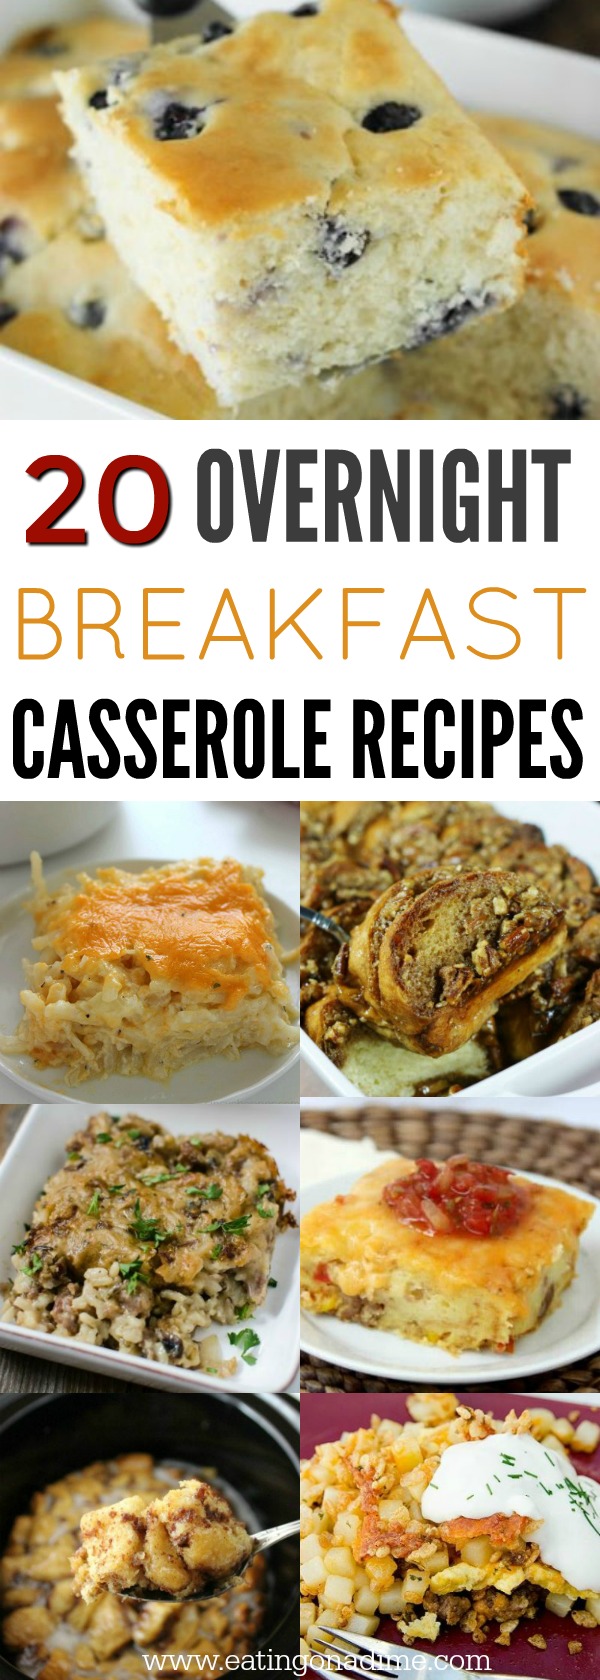 Overnight Breakfast Casserole Recipes - 20 Make Ahead Recipes